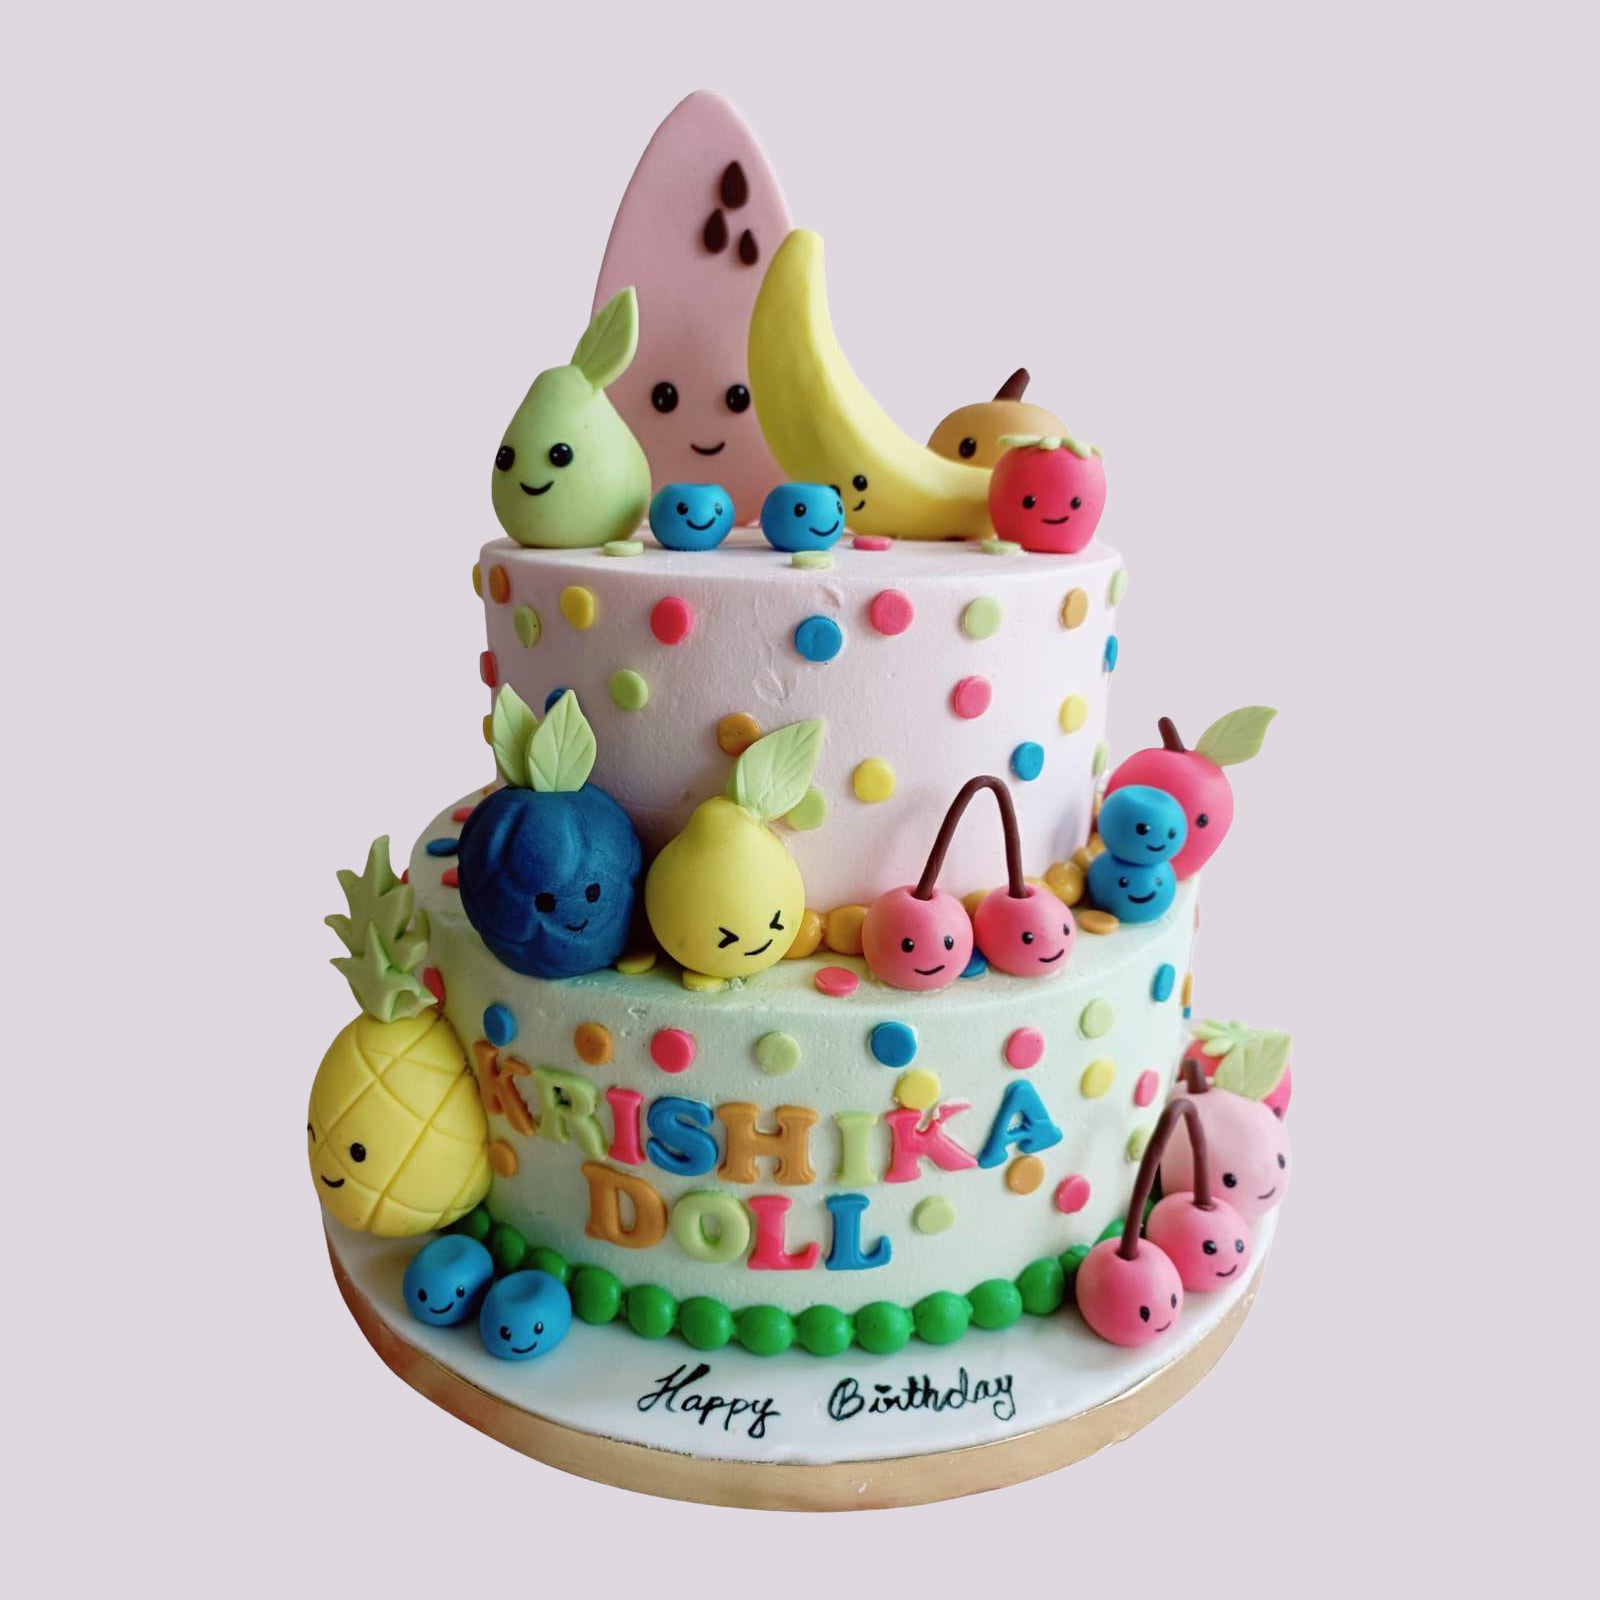 Zion's BT21 Kpop Cake, A Customize Kpop cake